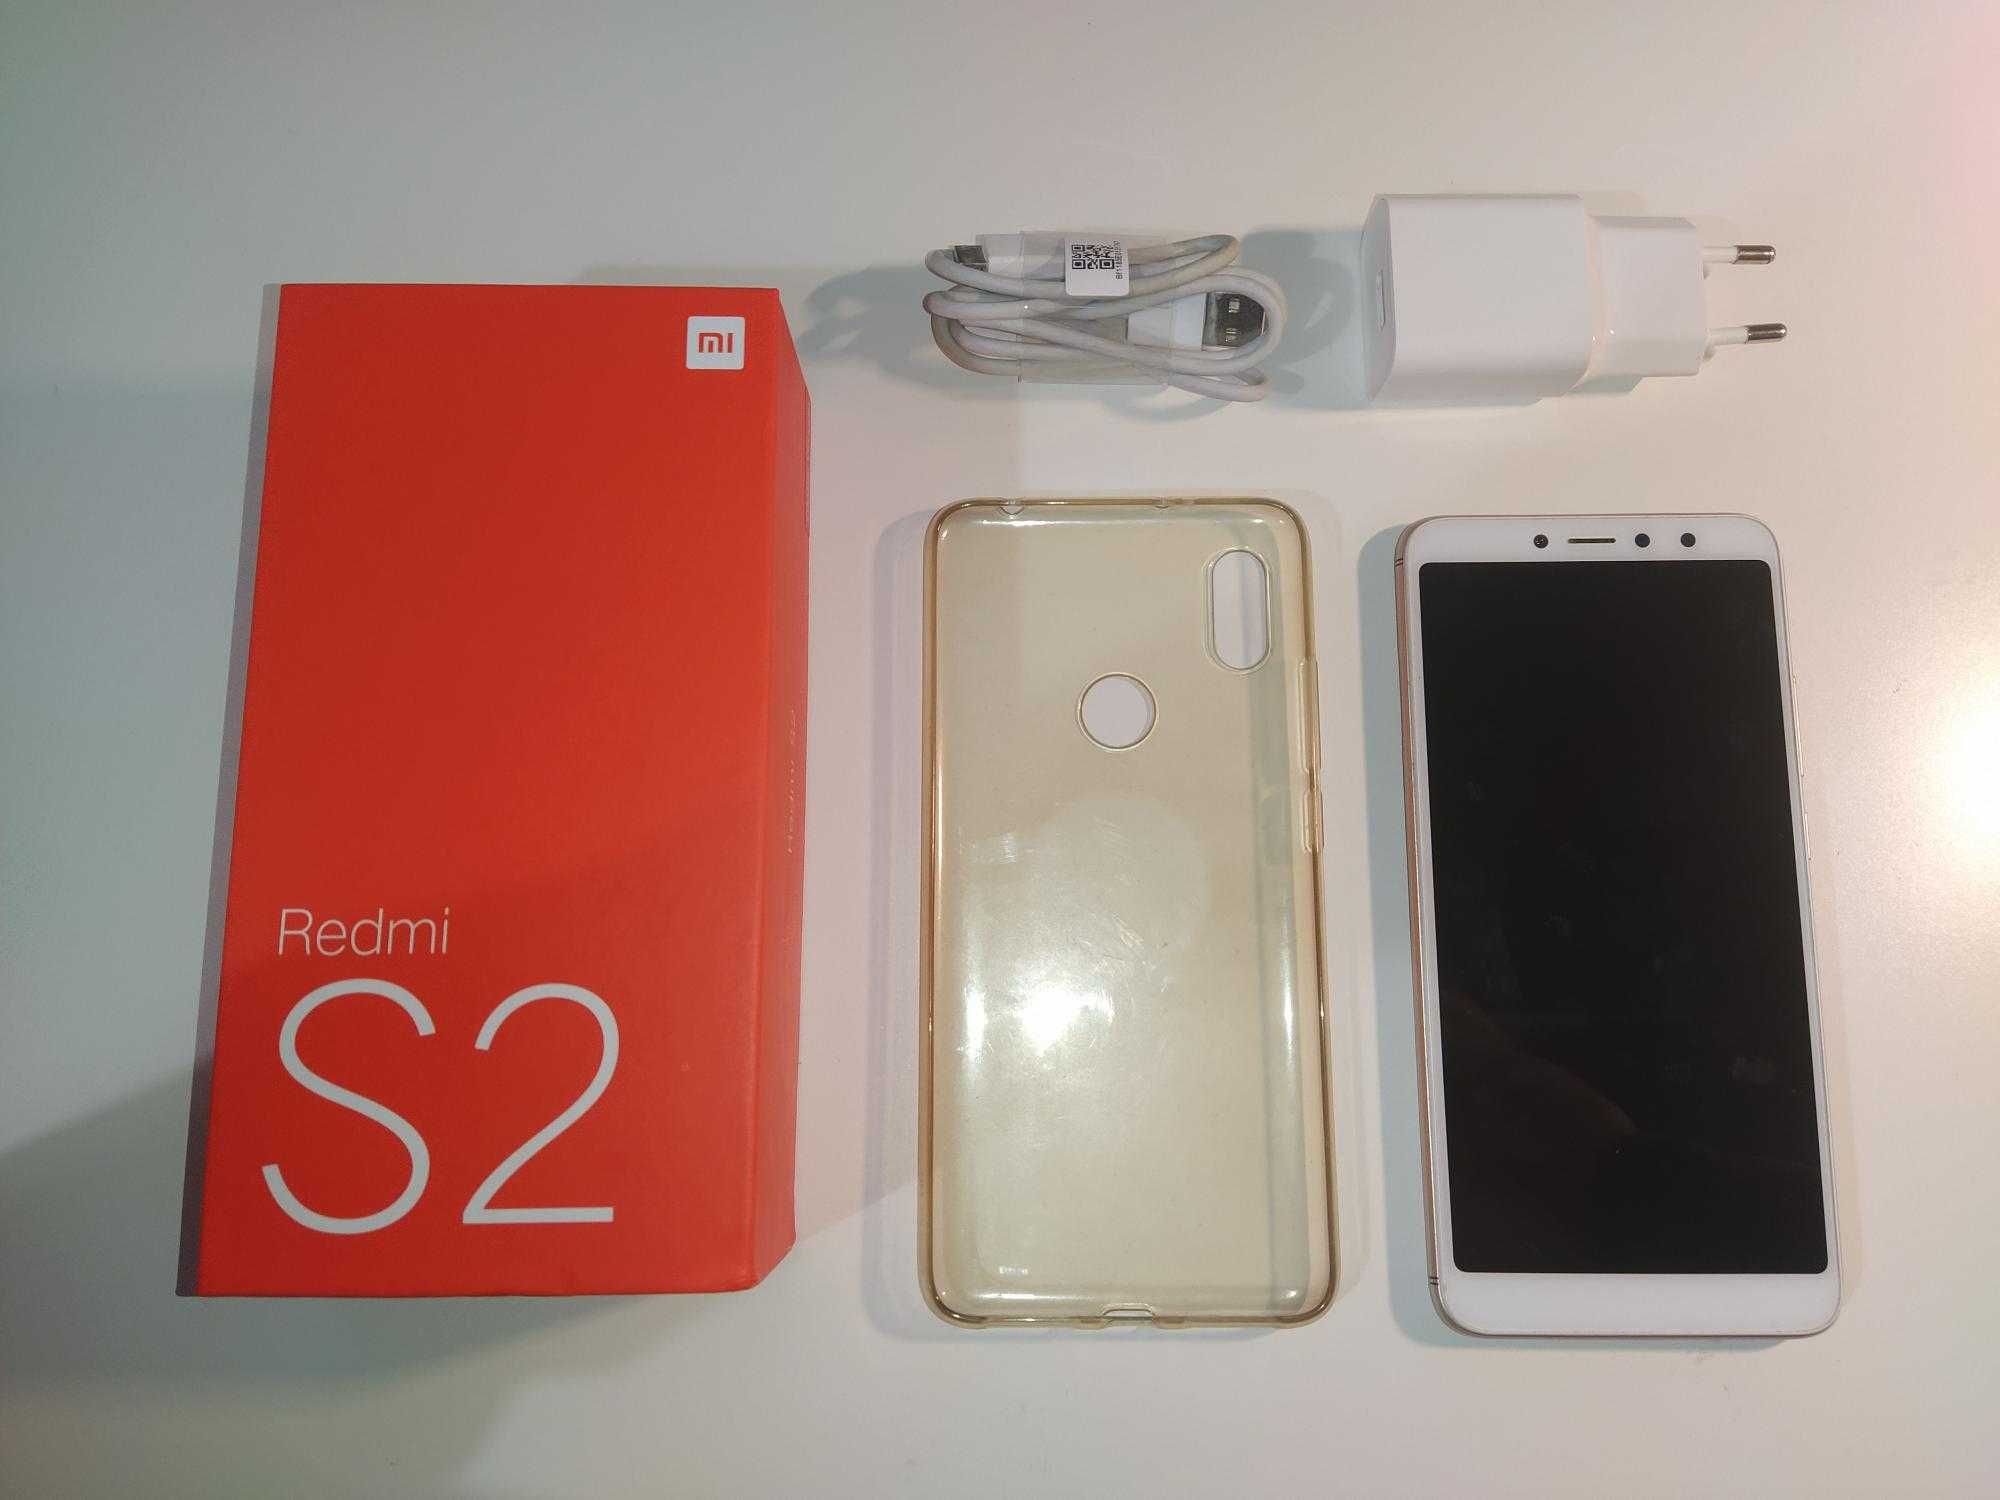 Telemóvel Xiaomi Redmi S2